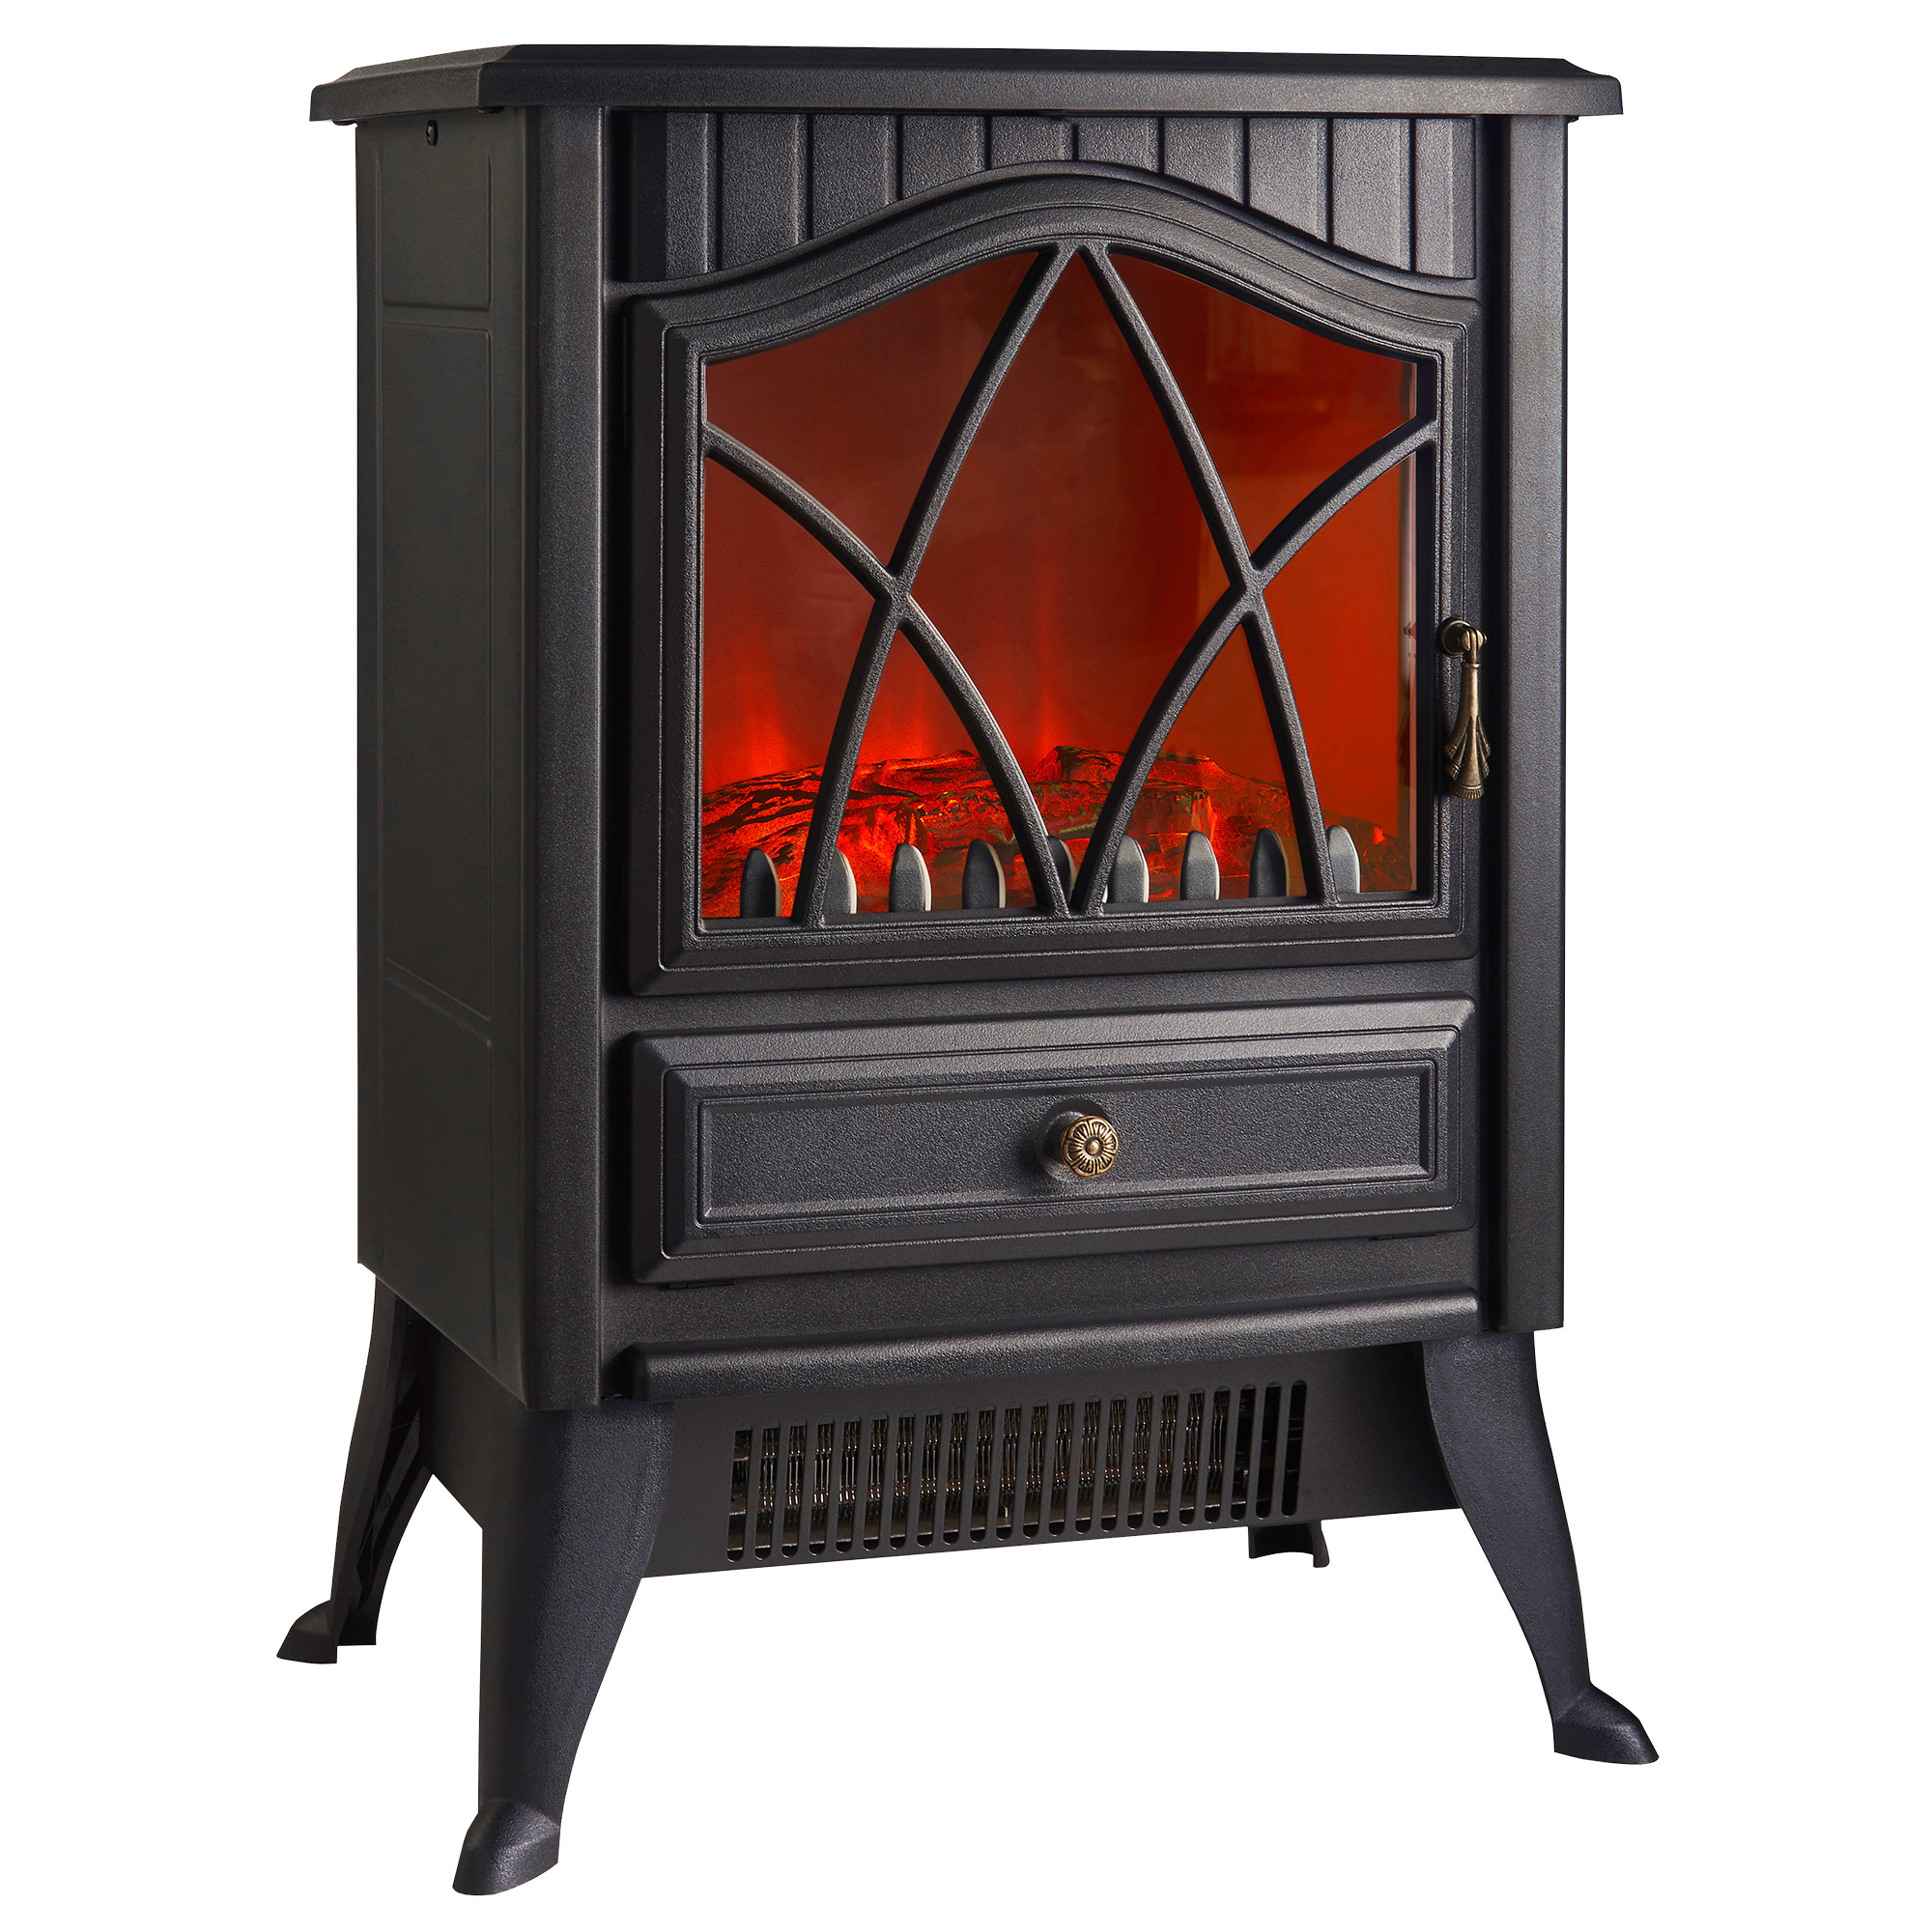 VonHaus Electric Stove Heater 1850W Indoor Fireplace Log/Wood Burner LED Flame